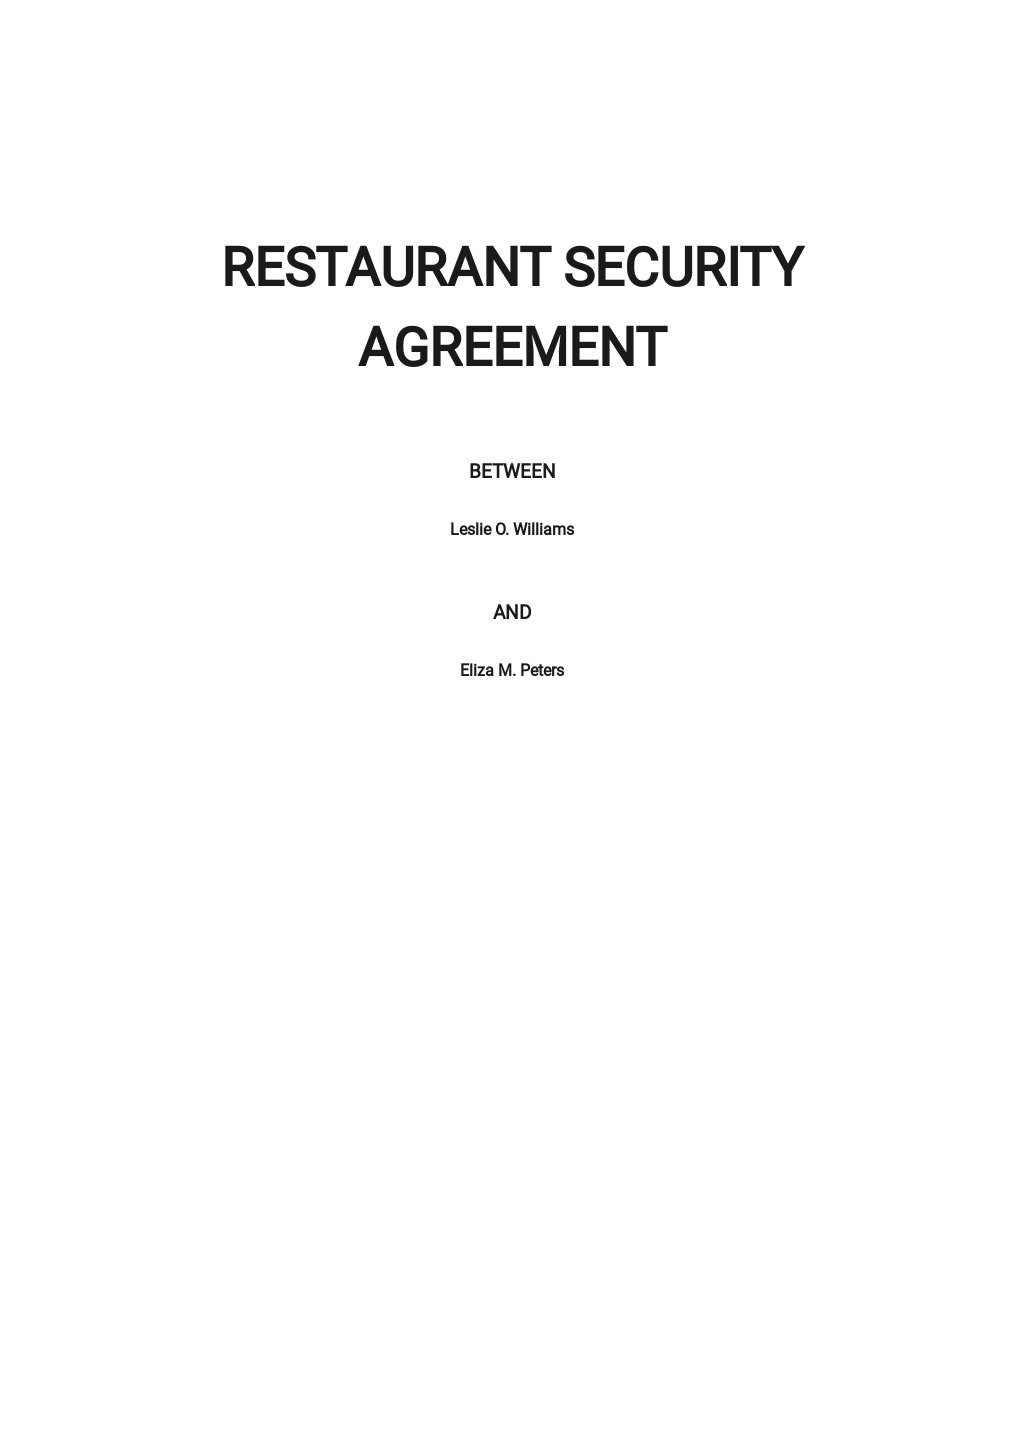 Restaurant Security Agreement Template.jpe